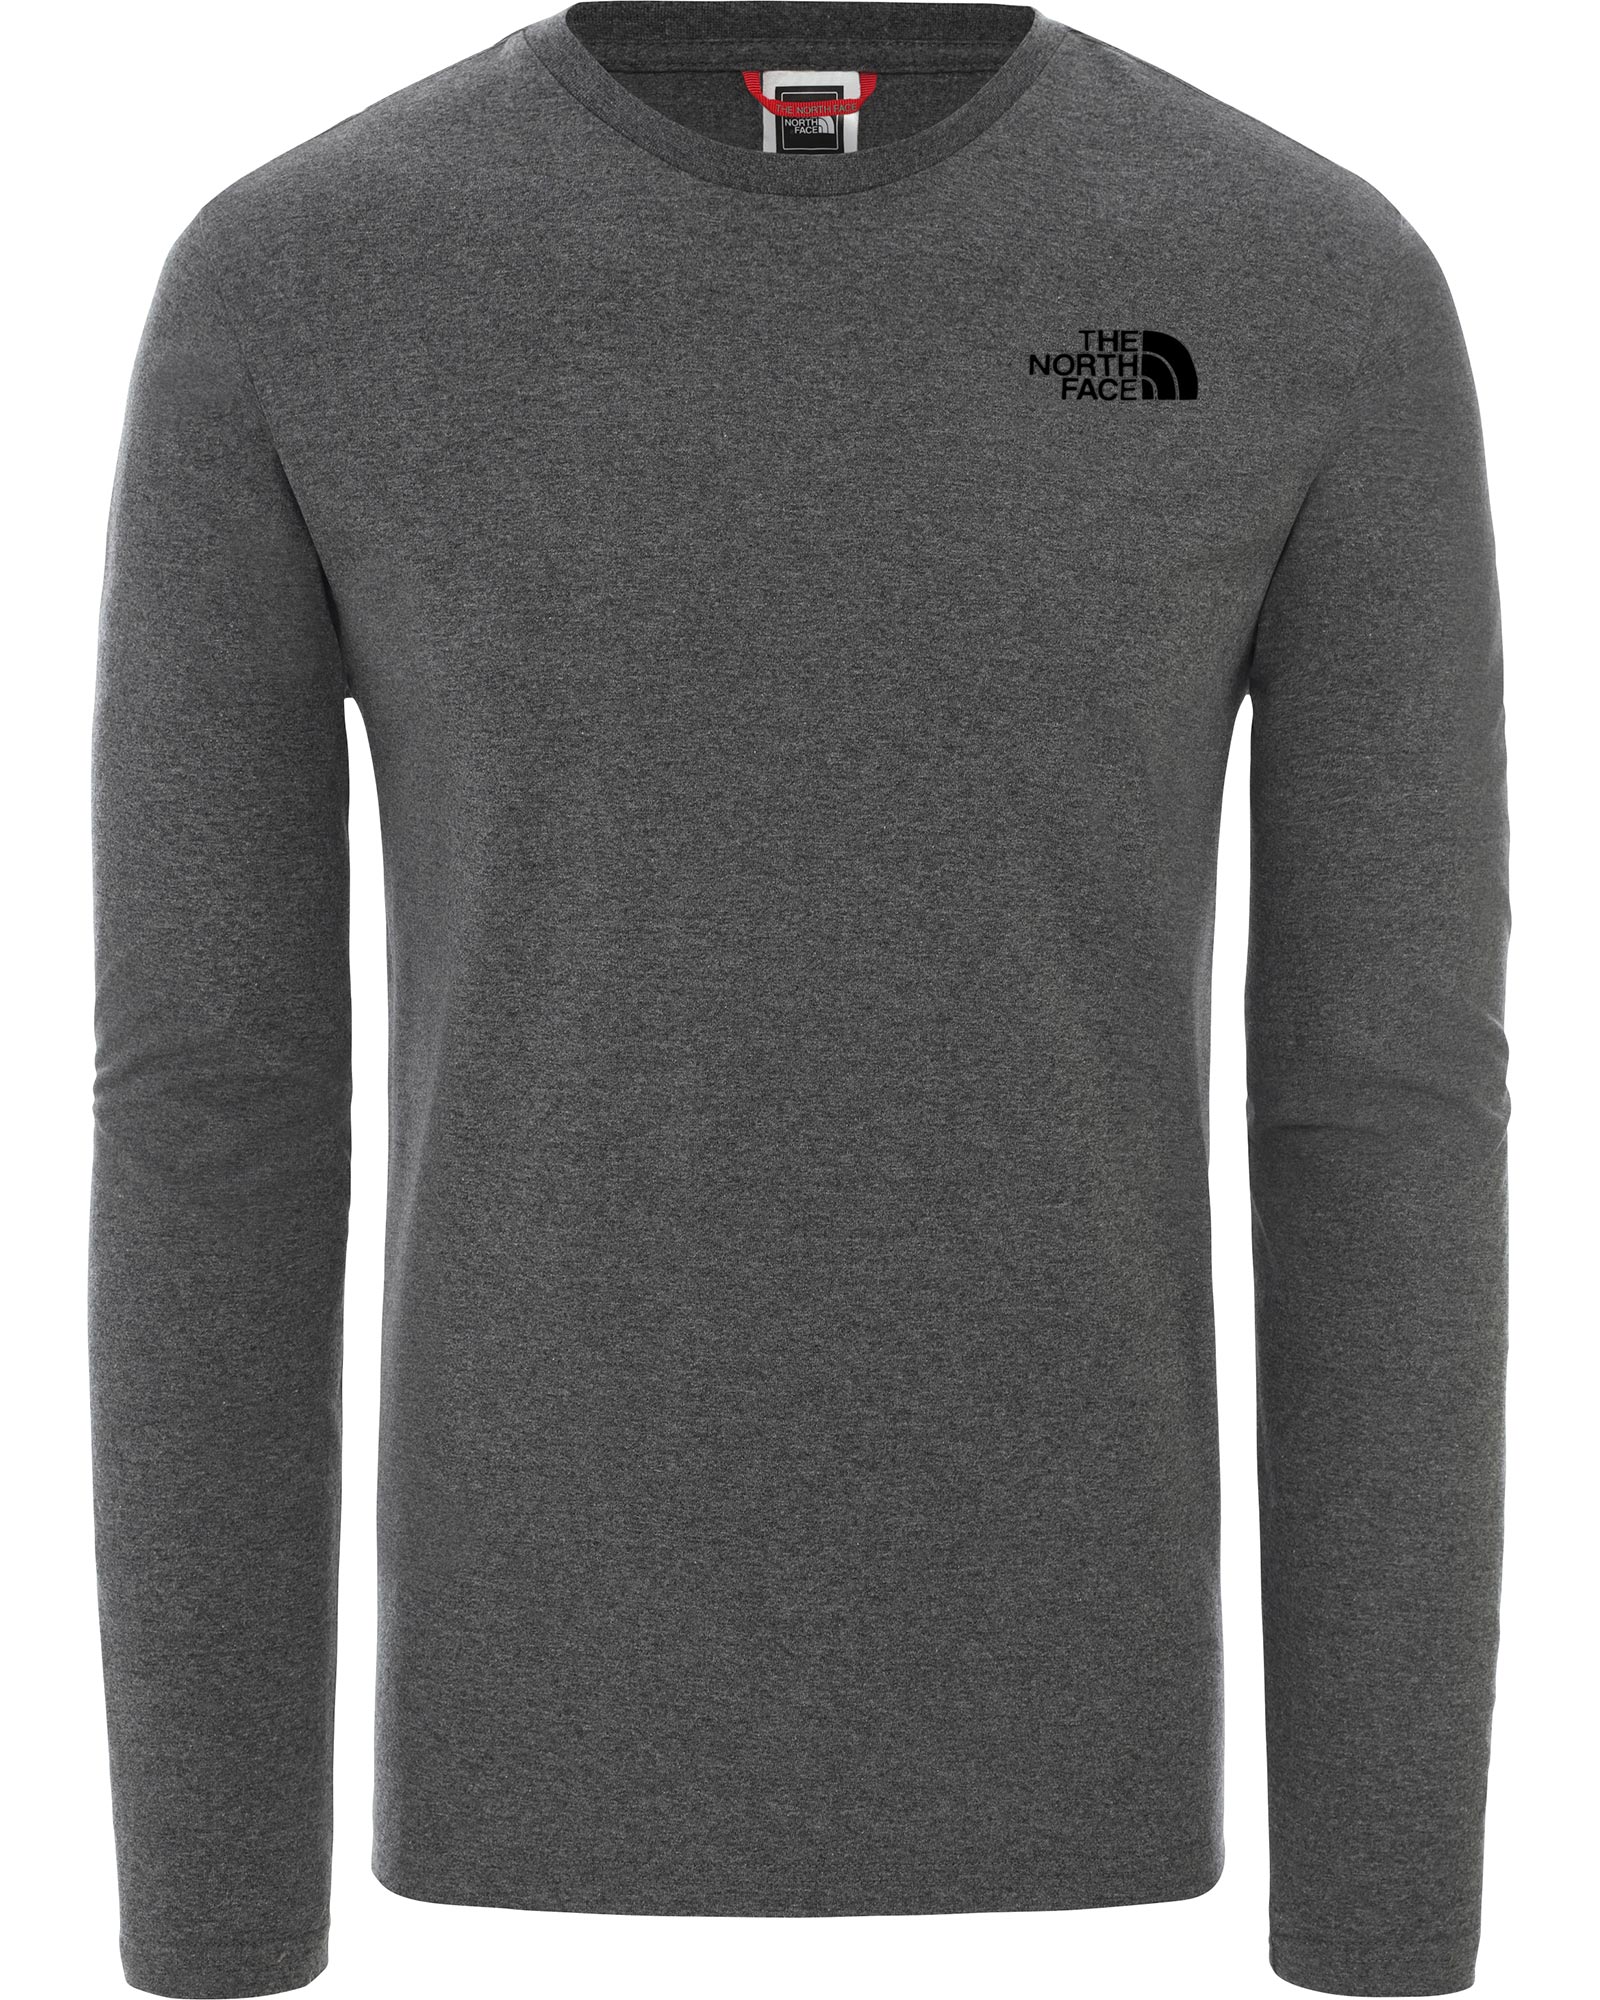 The North Face Easy Men’s Long Sleeve T Shirt - TNF Medium Grey Heather/Black Logo S